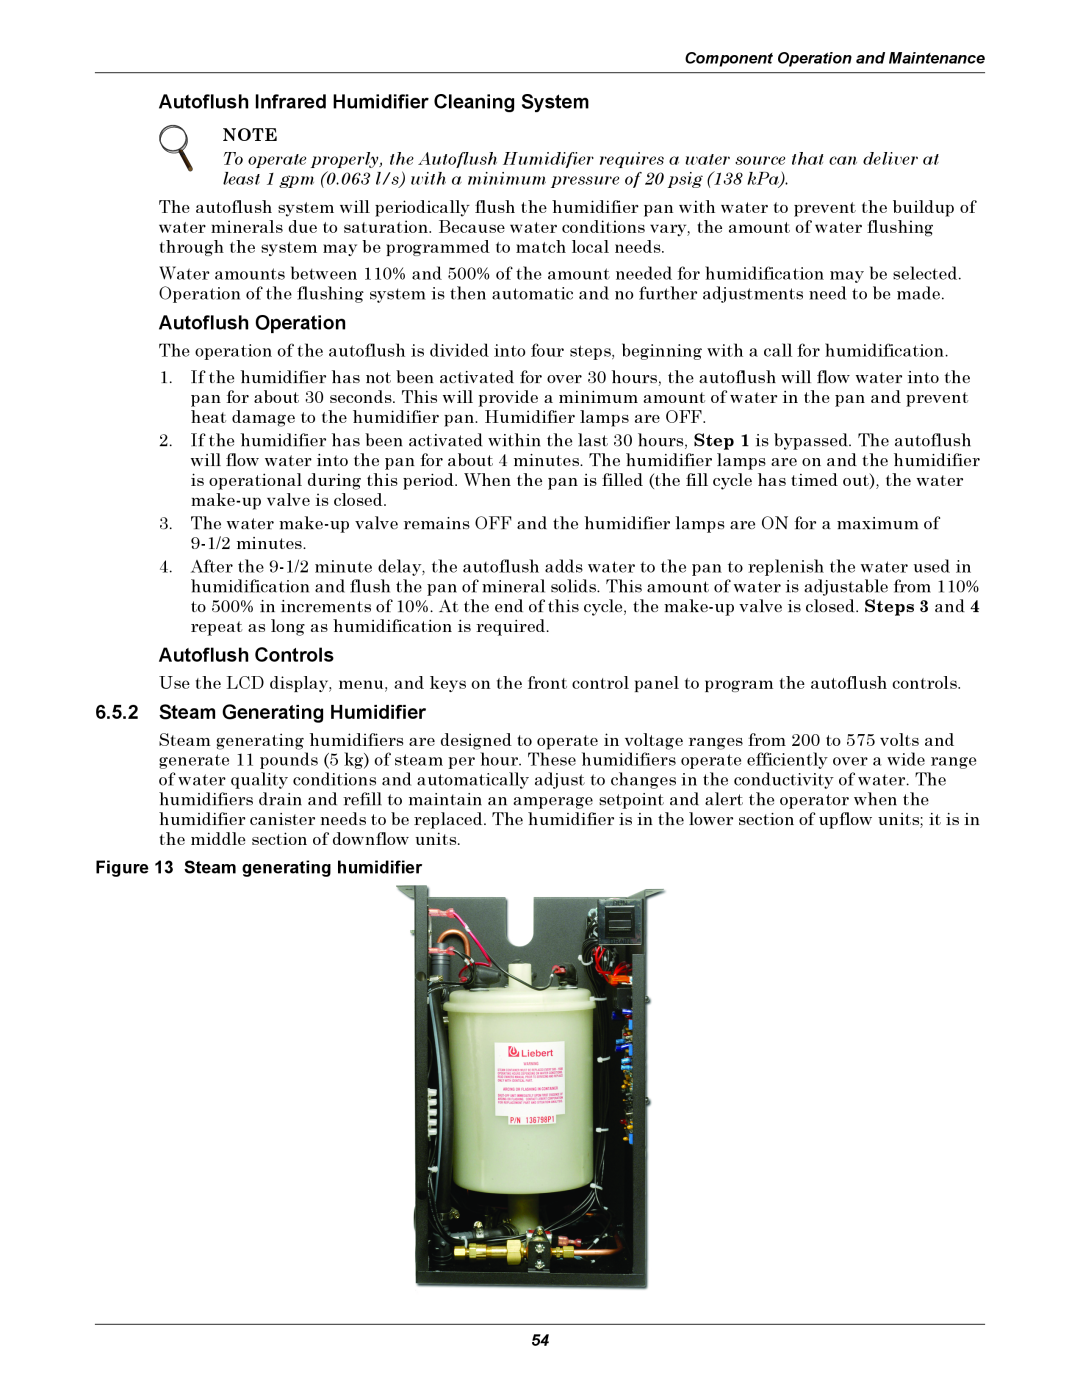 Liebert 3000 manual Autoflush Infrared Humidifier Cleaning System, Autoflush Operation, Autoflush Controls 